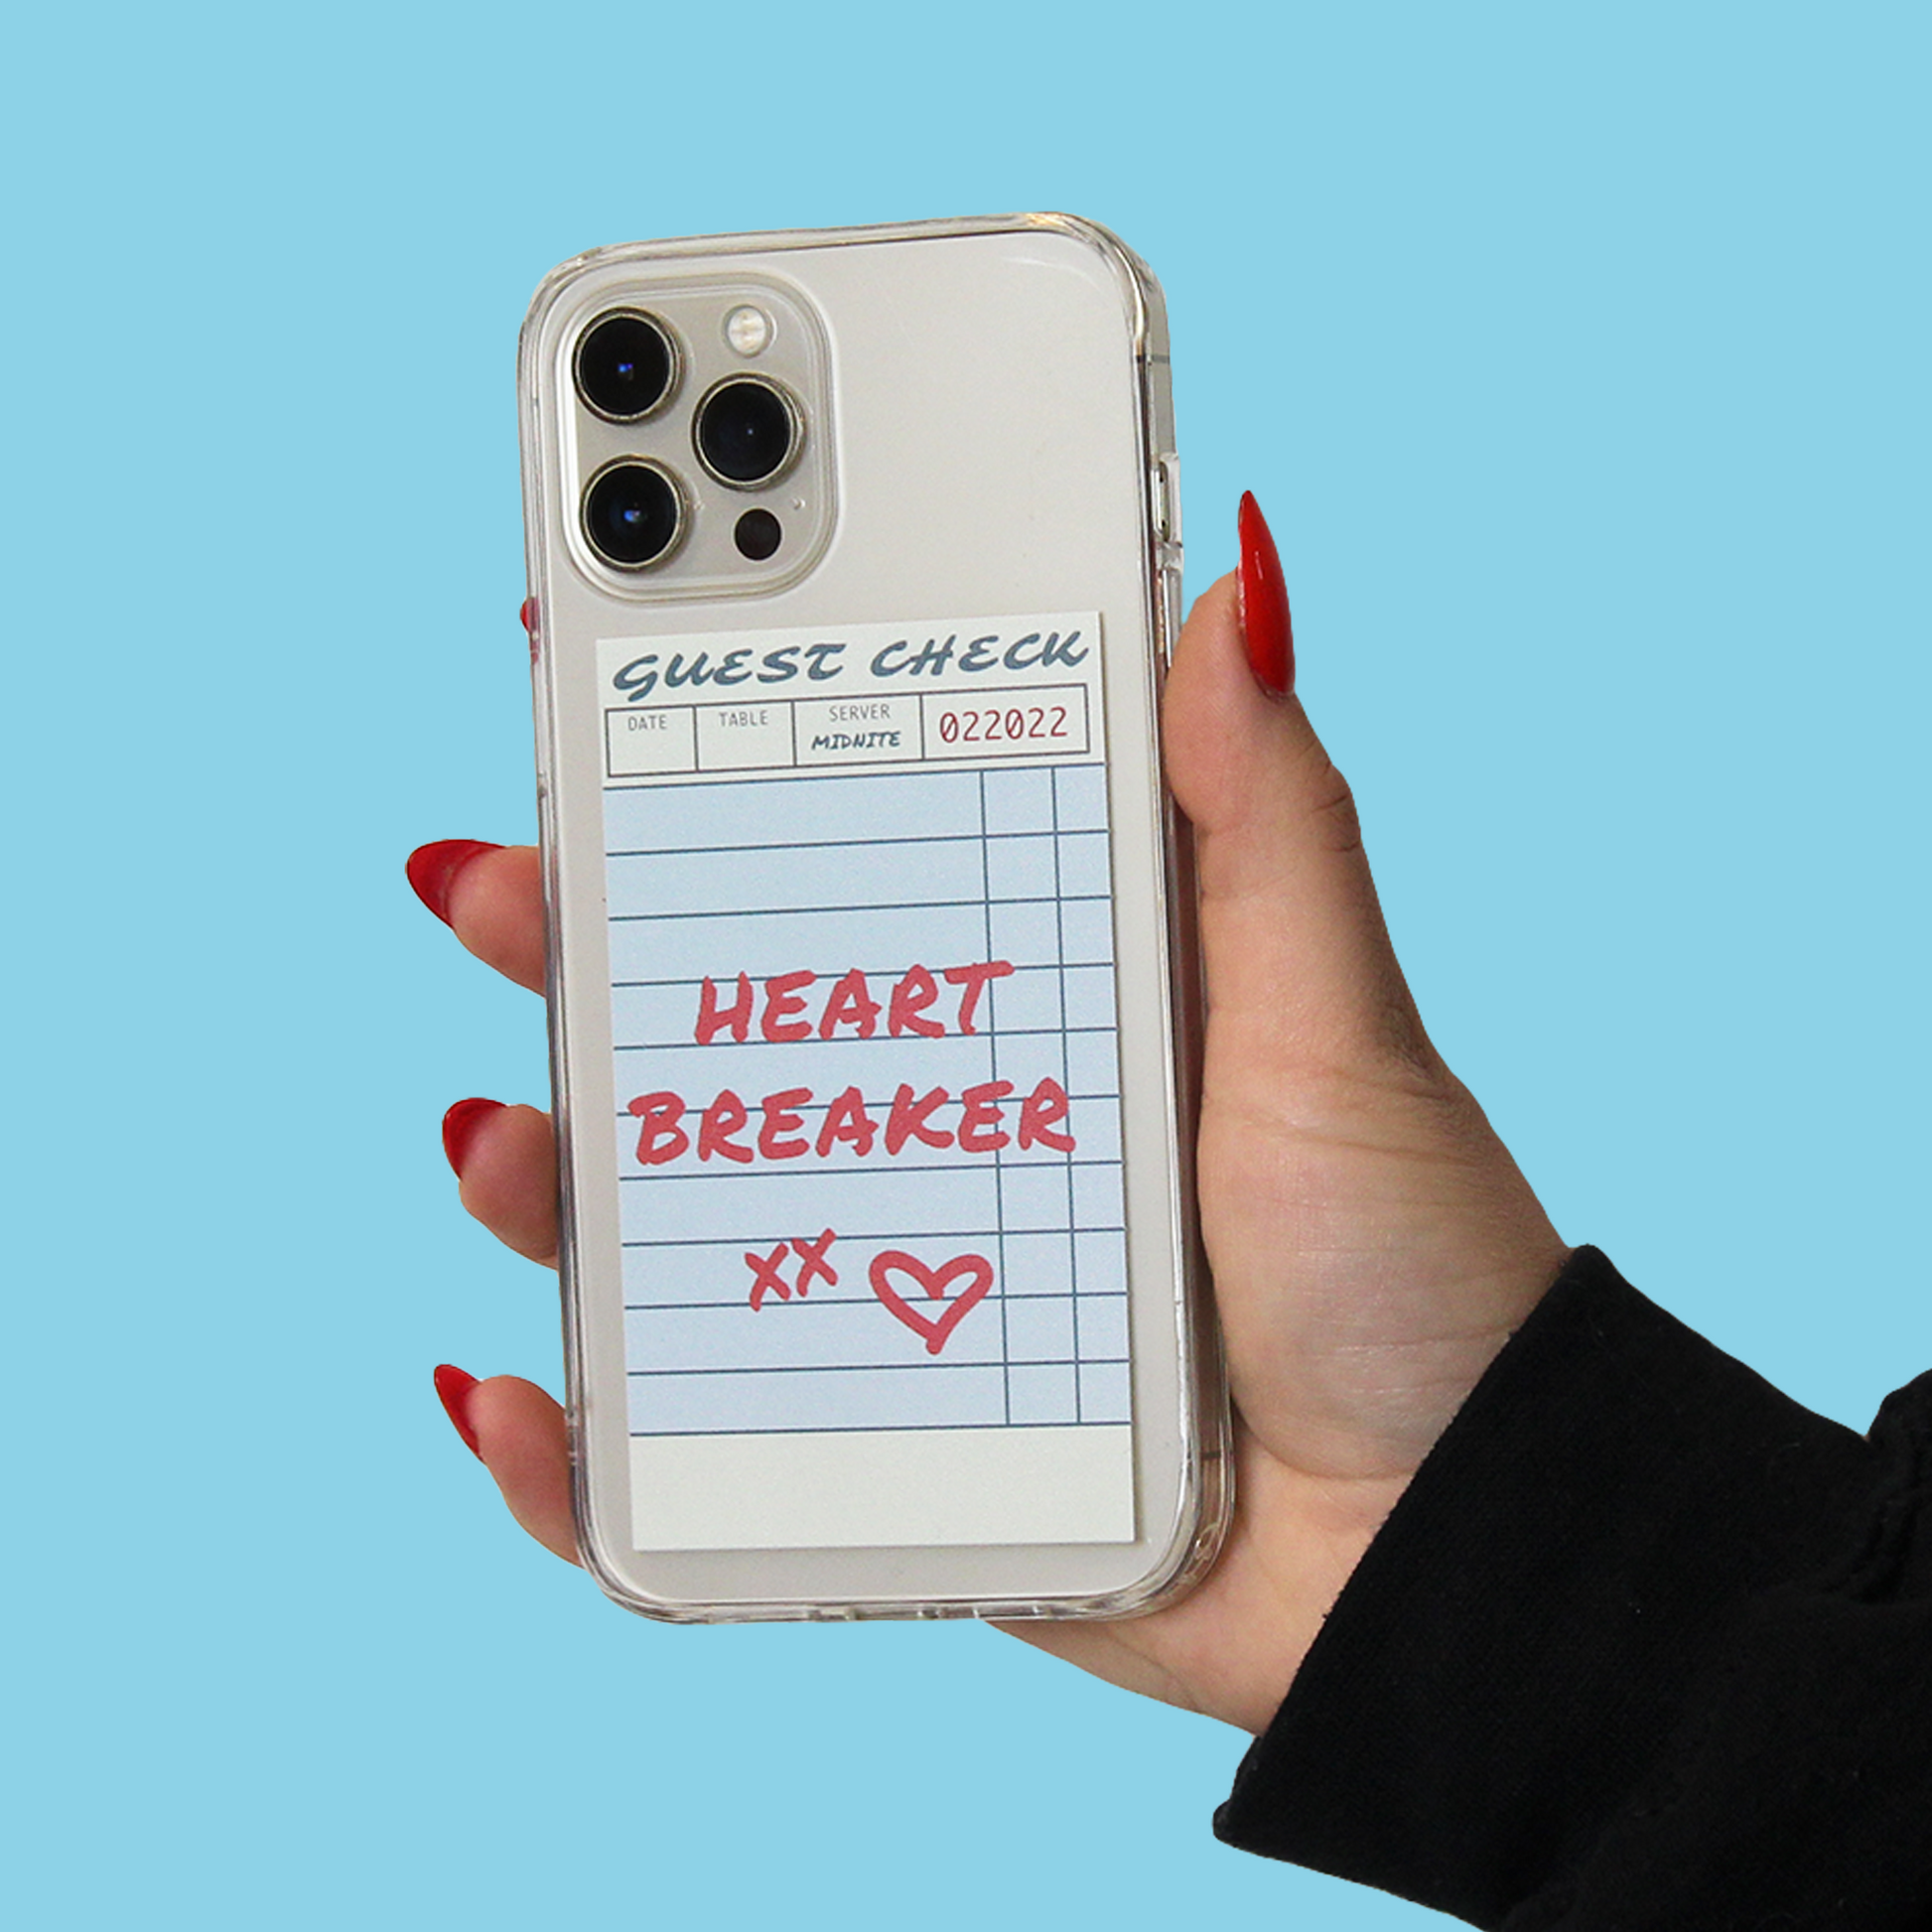 heartbreaker iphone case, heart iphone case, aesthetic phone case, guest check phone case